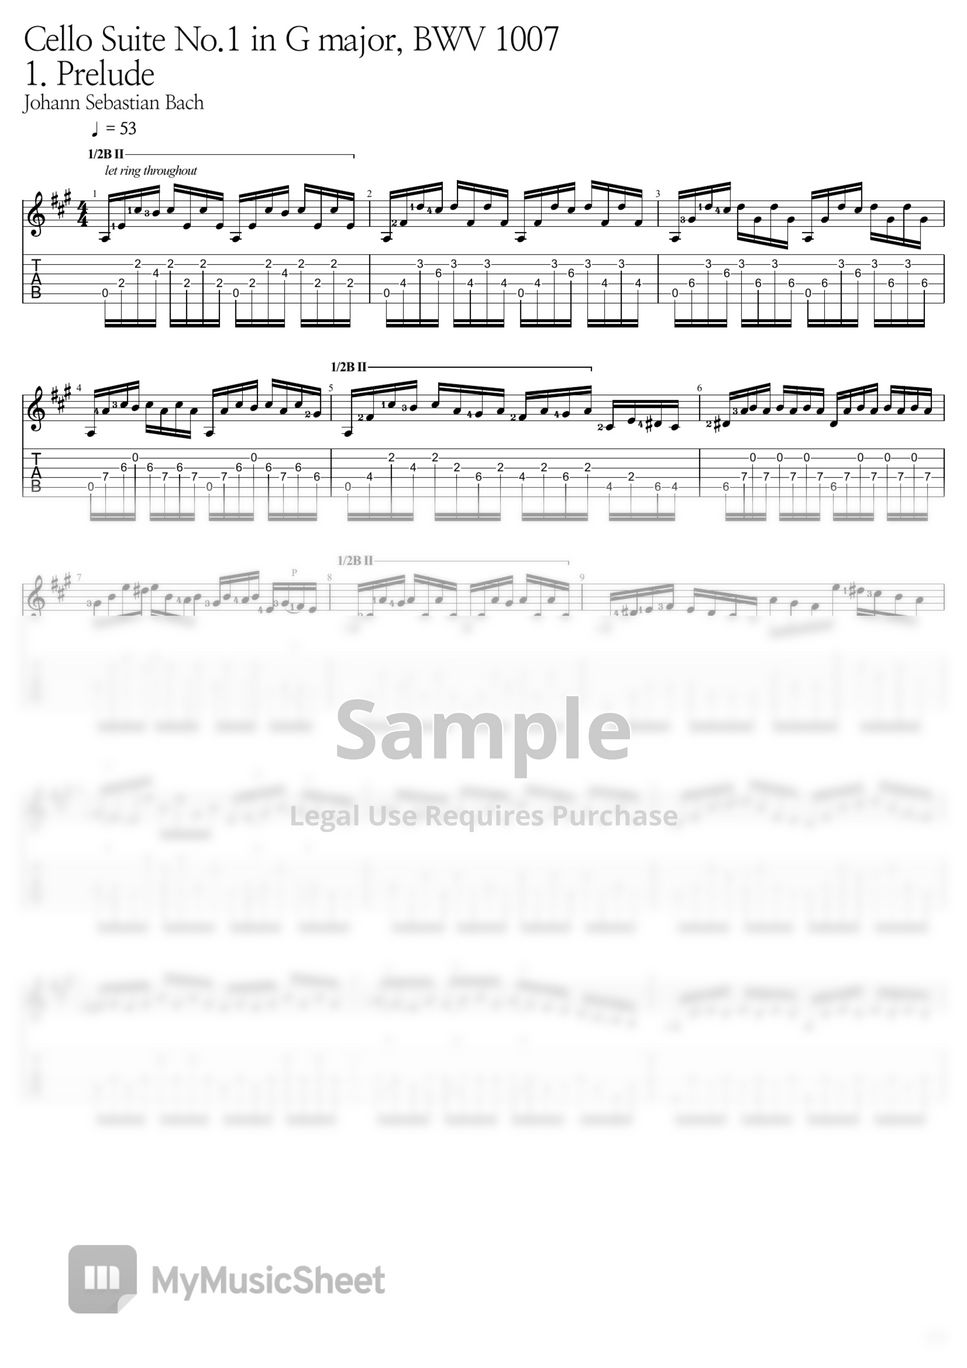 Johann Sebastian Bach - Cello Suite No.1 in G major, BWV 1007 1. Prelude by WOORAM